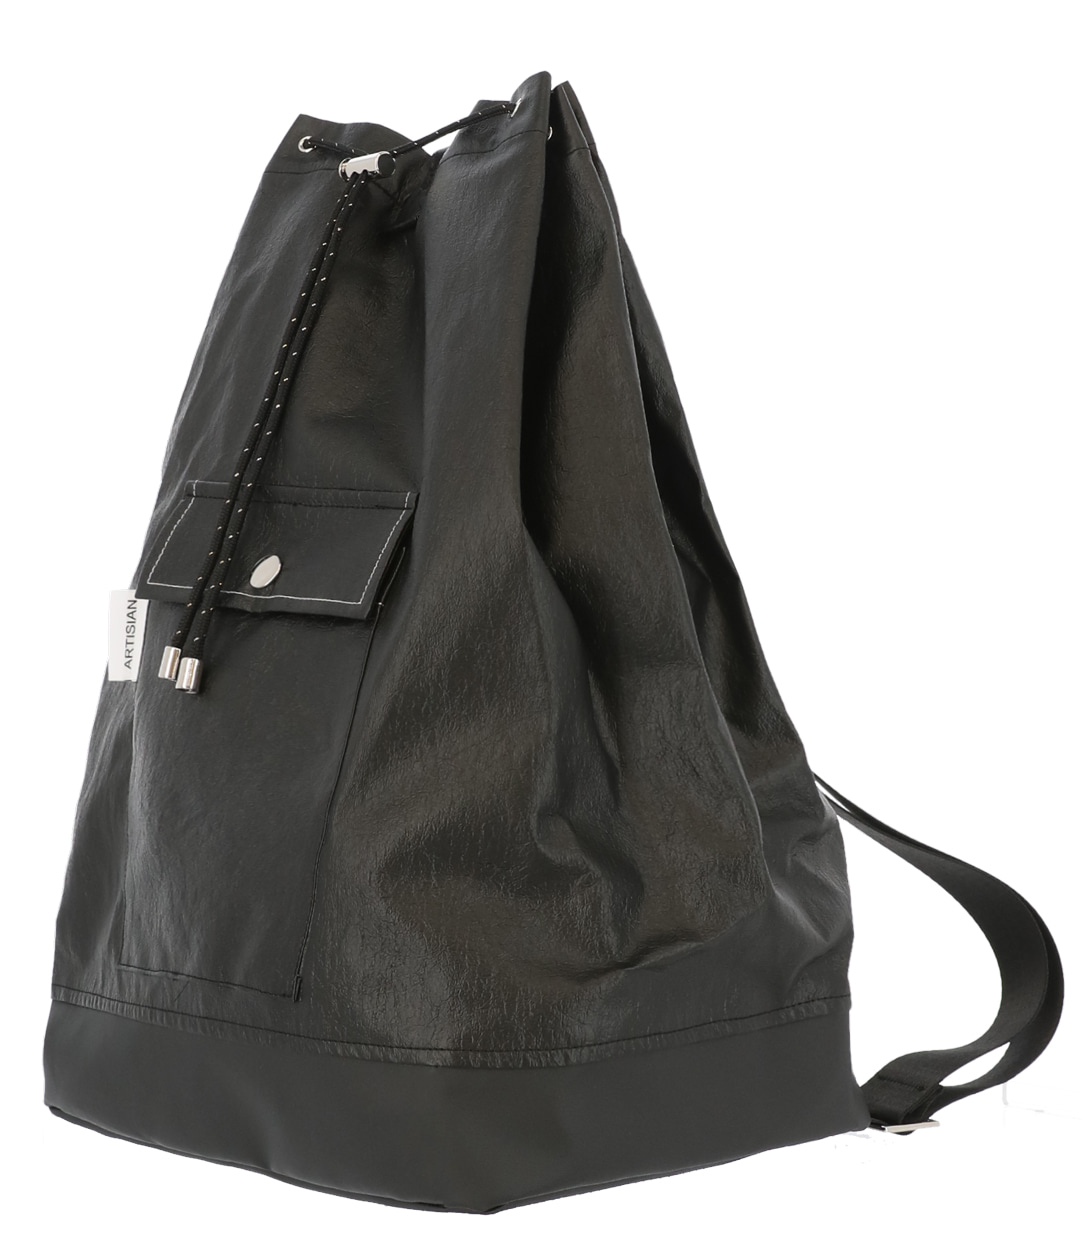 Hanji leather duffel bag